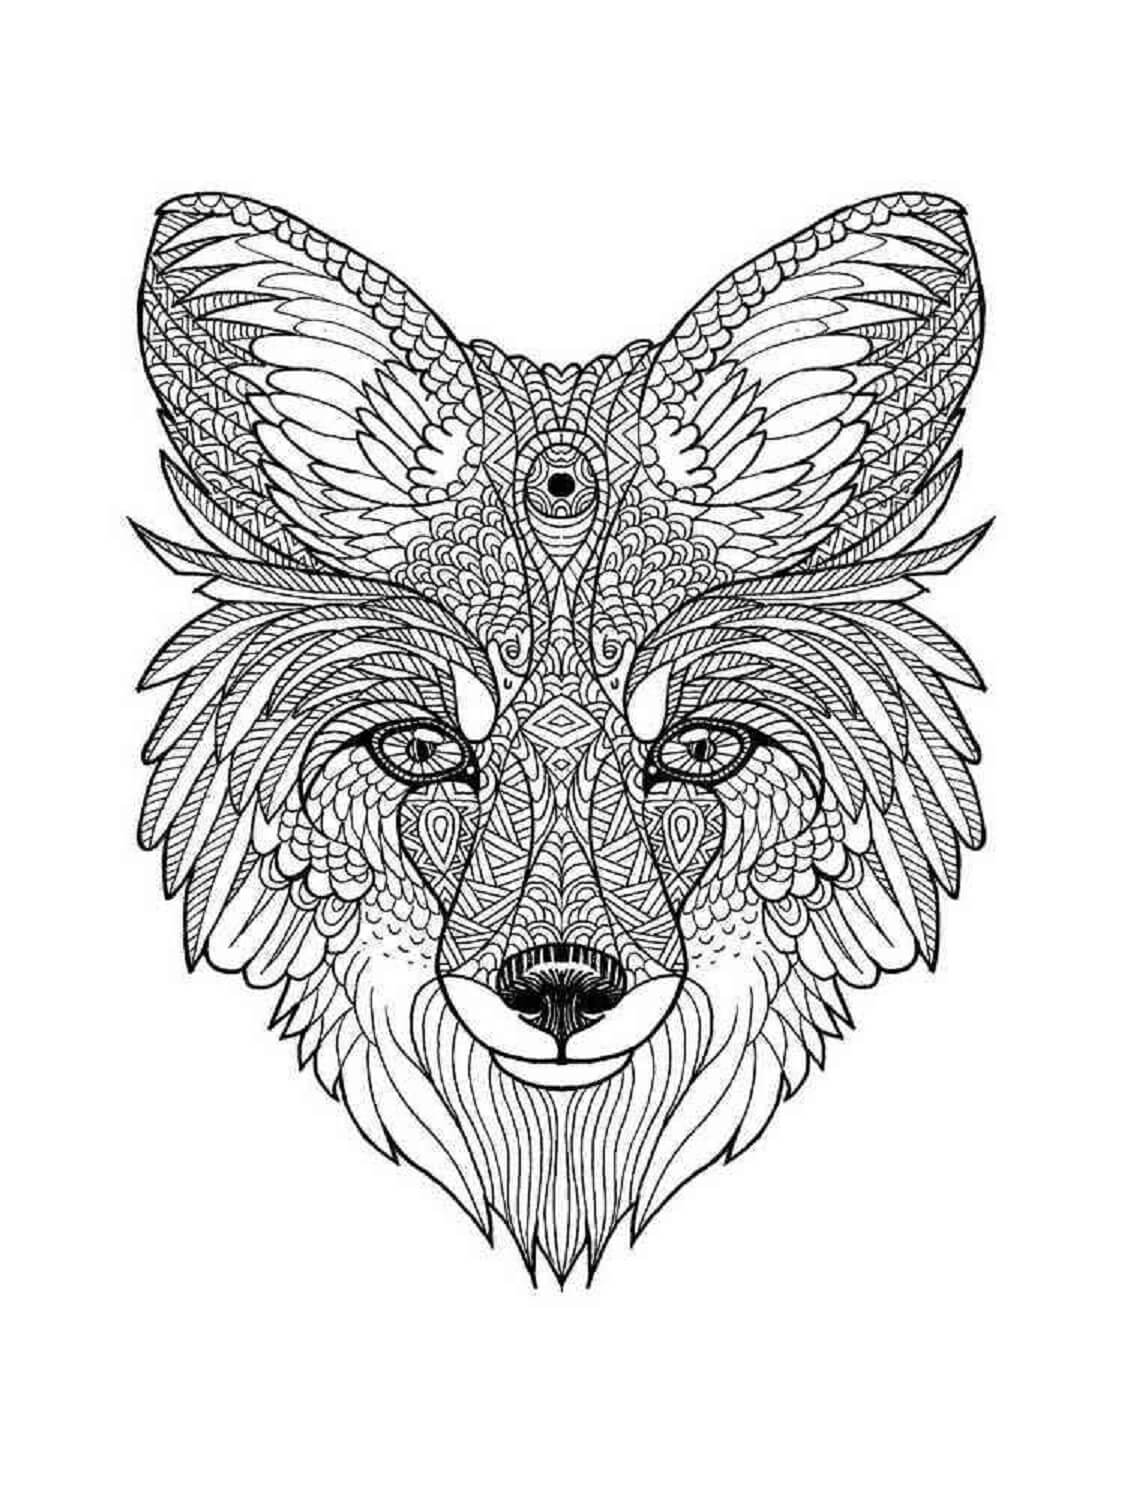 Mandala Fox Coloring Page - Sheet 8 Mandalas